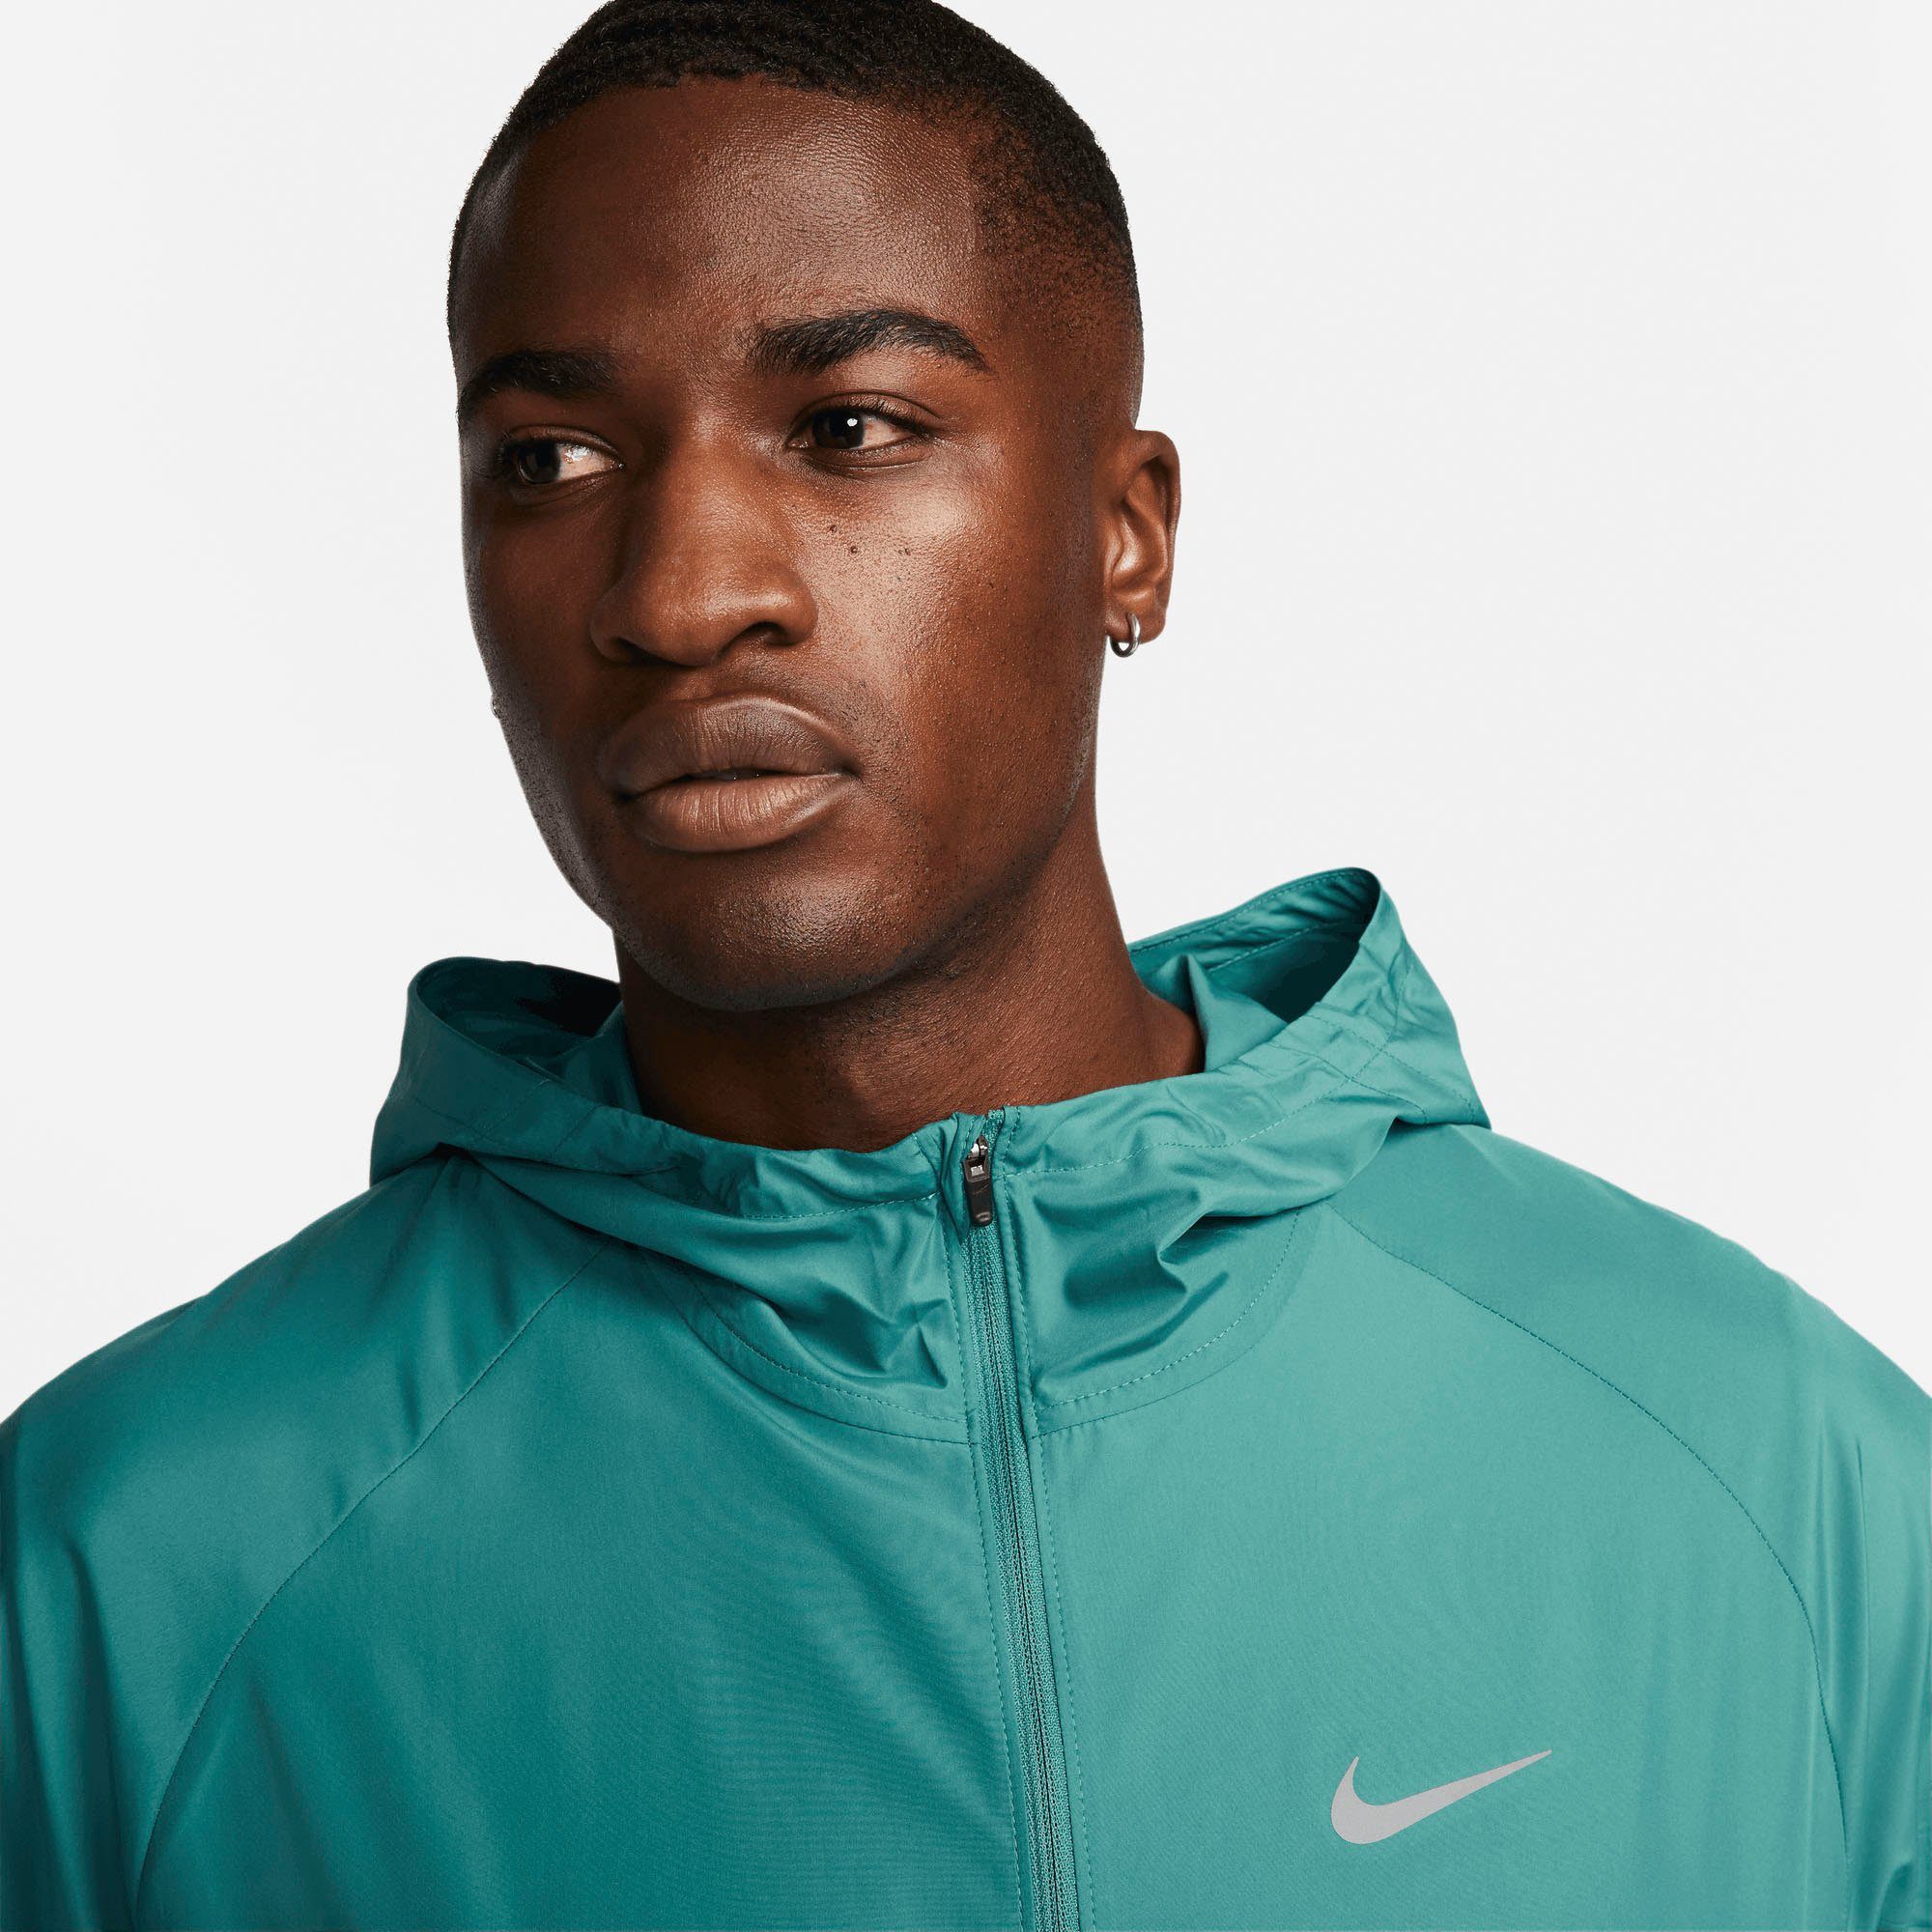 Laufjacke TEAL/REFLECTIVE Repel Running Men's Nike Miler Jacket SILV MINERAL